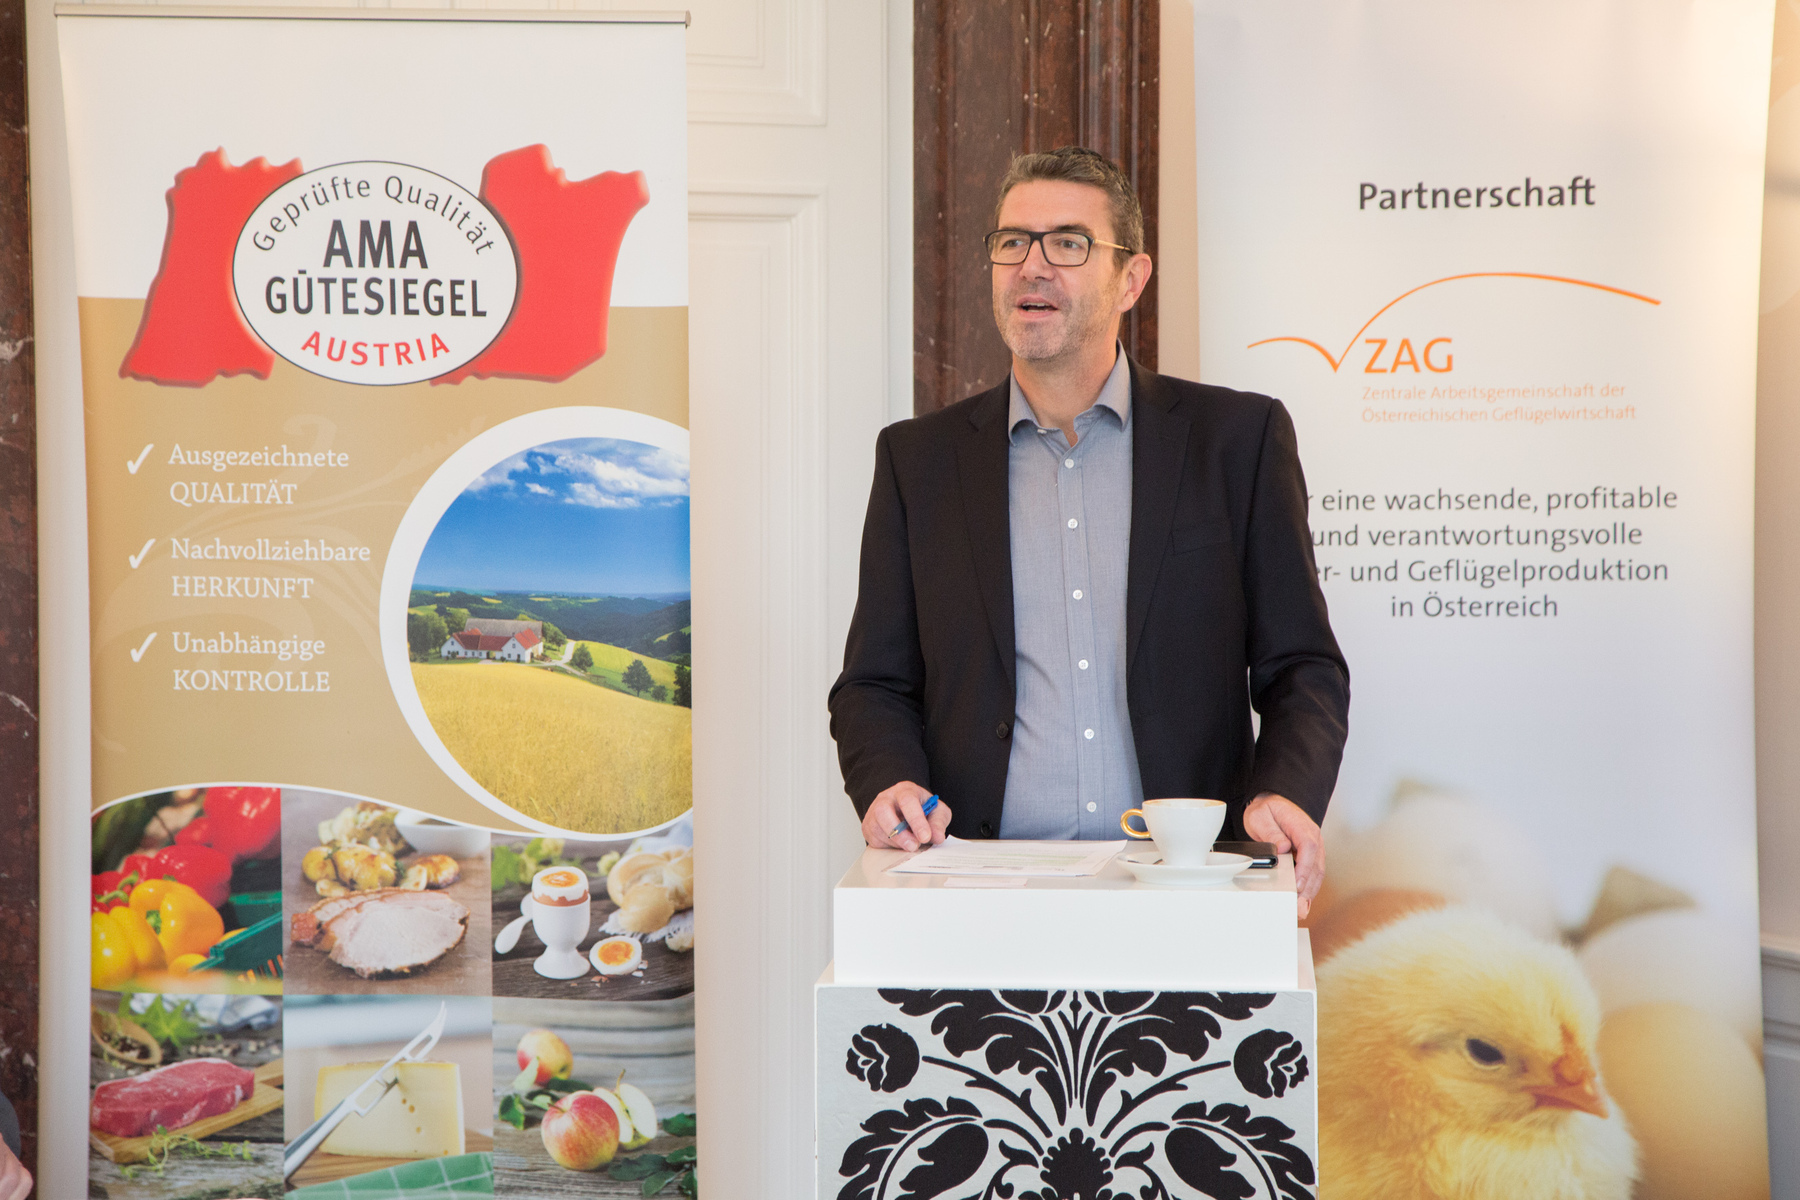 009-2018-10-08-ama © Agrarmarkt Austria Marketing/APA-Fotoservice/Juhasz